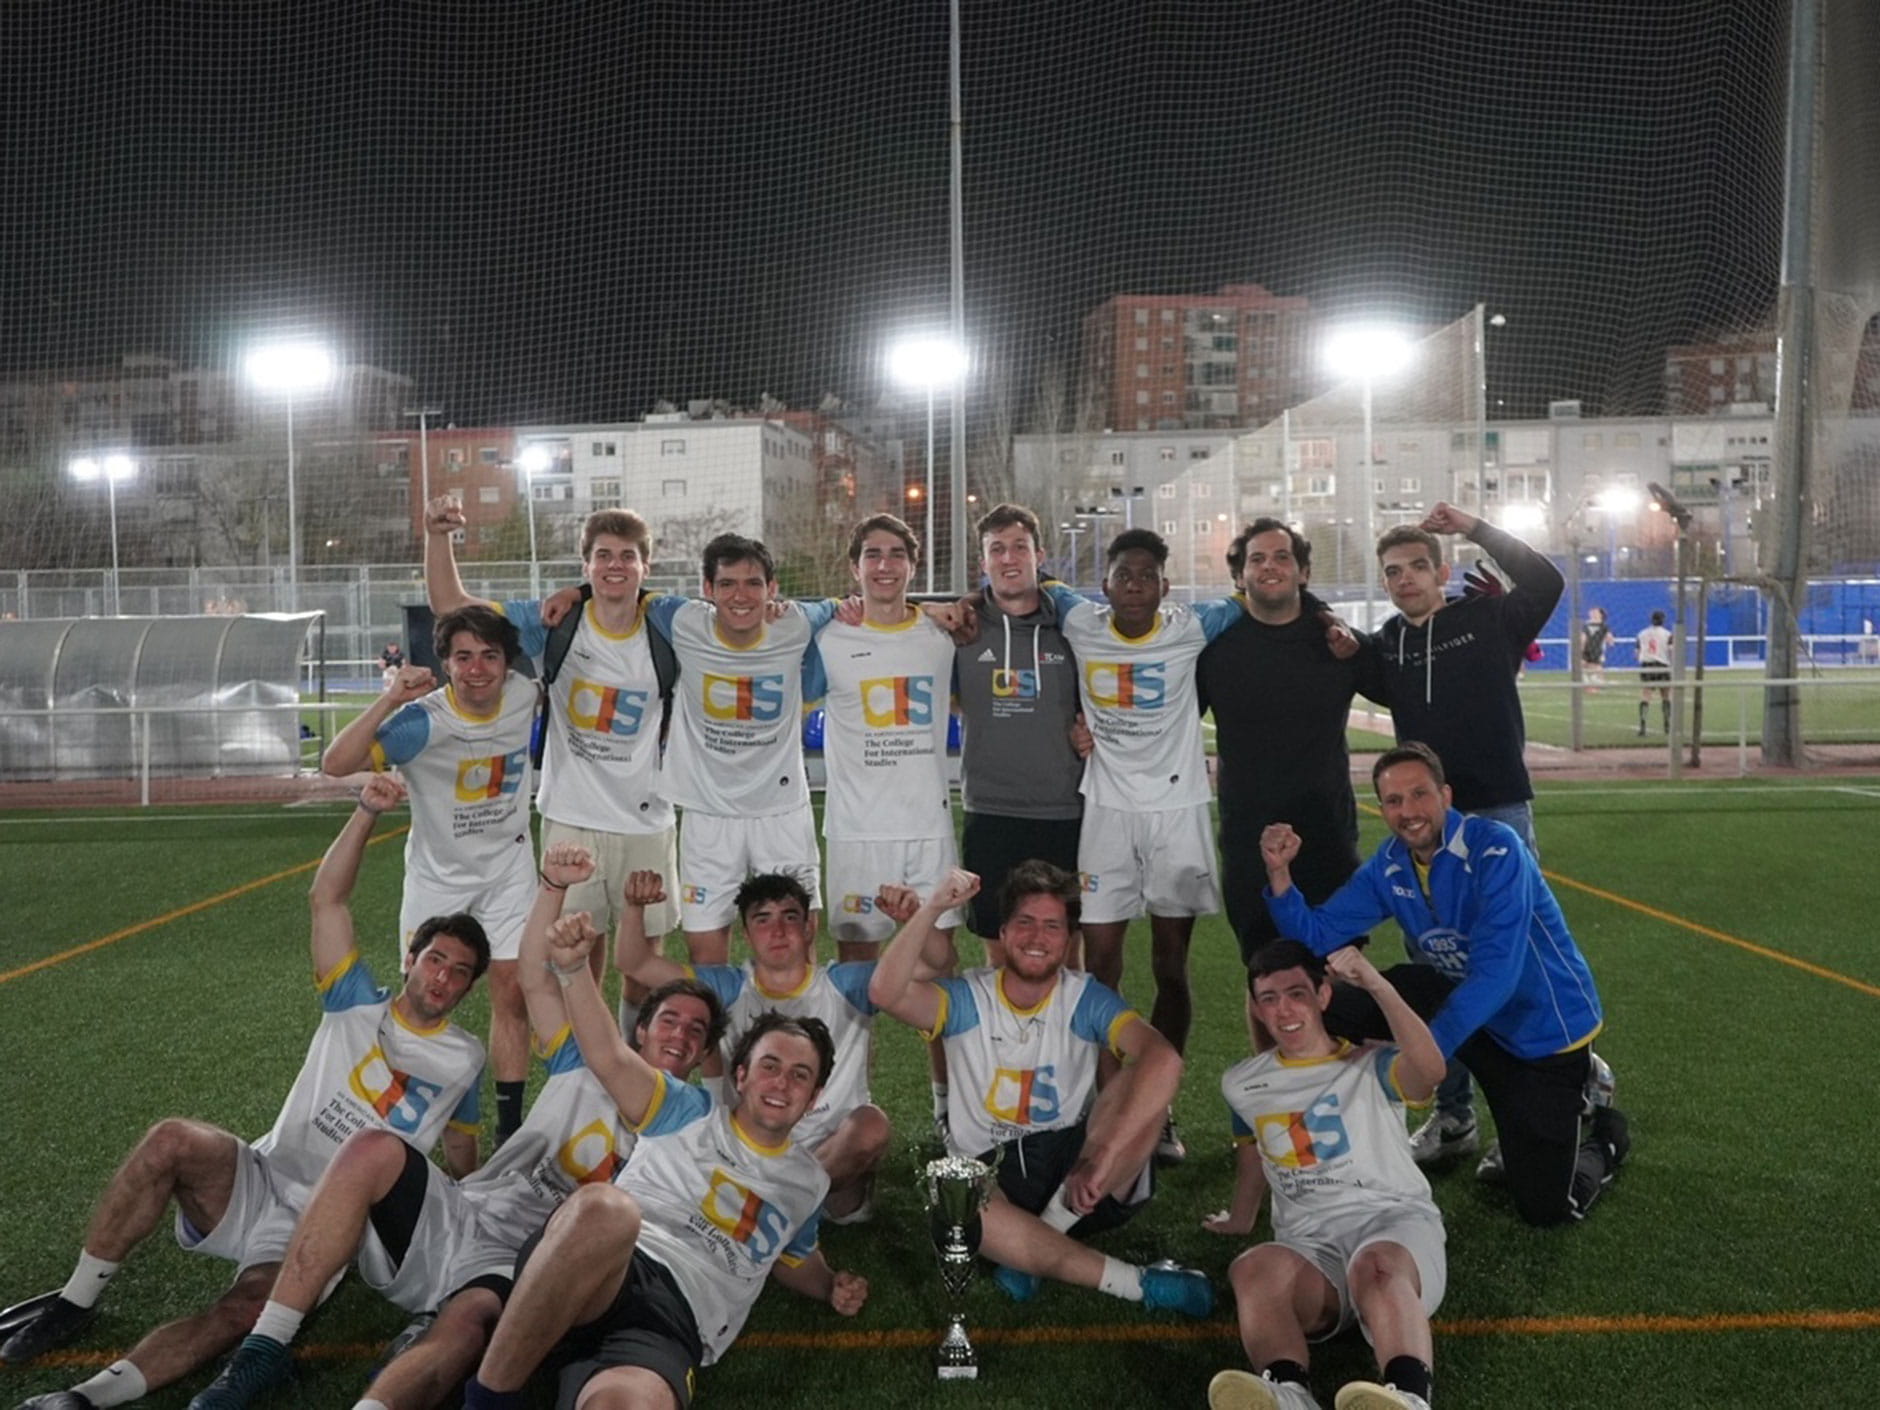 Members of the men's soccer team at CIS Madrid